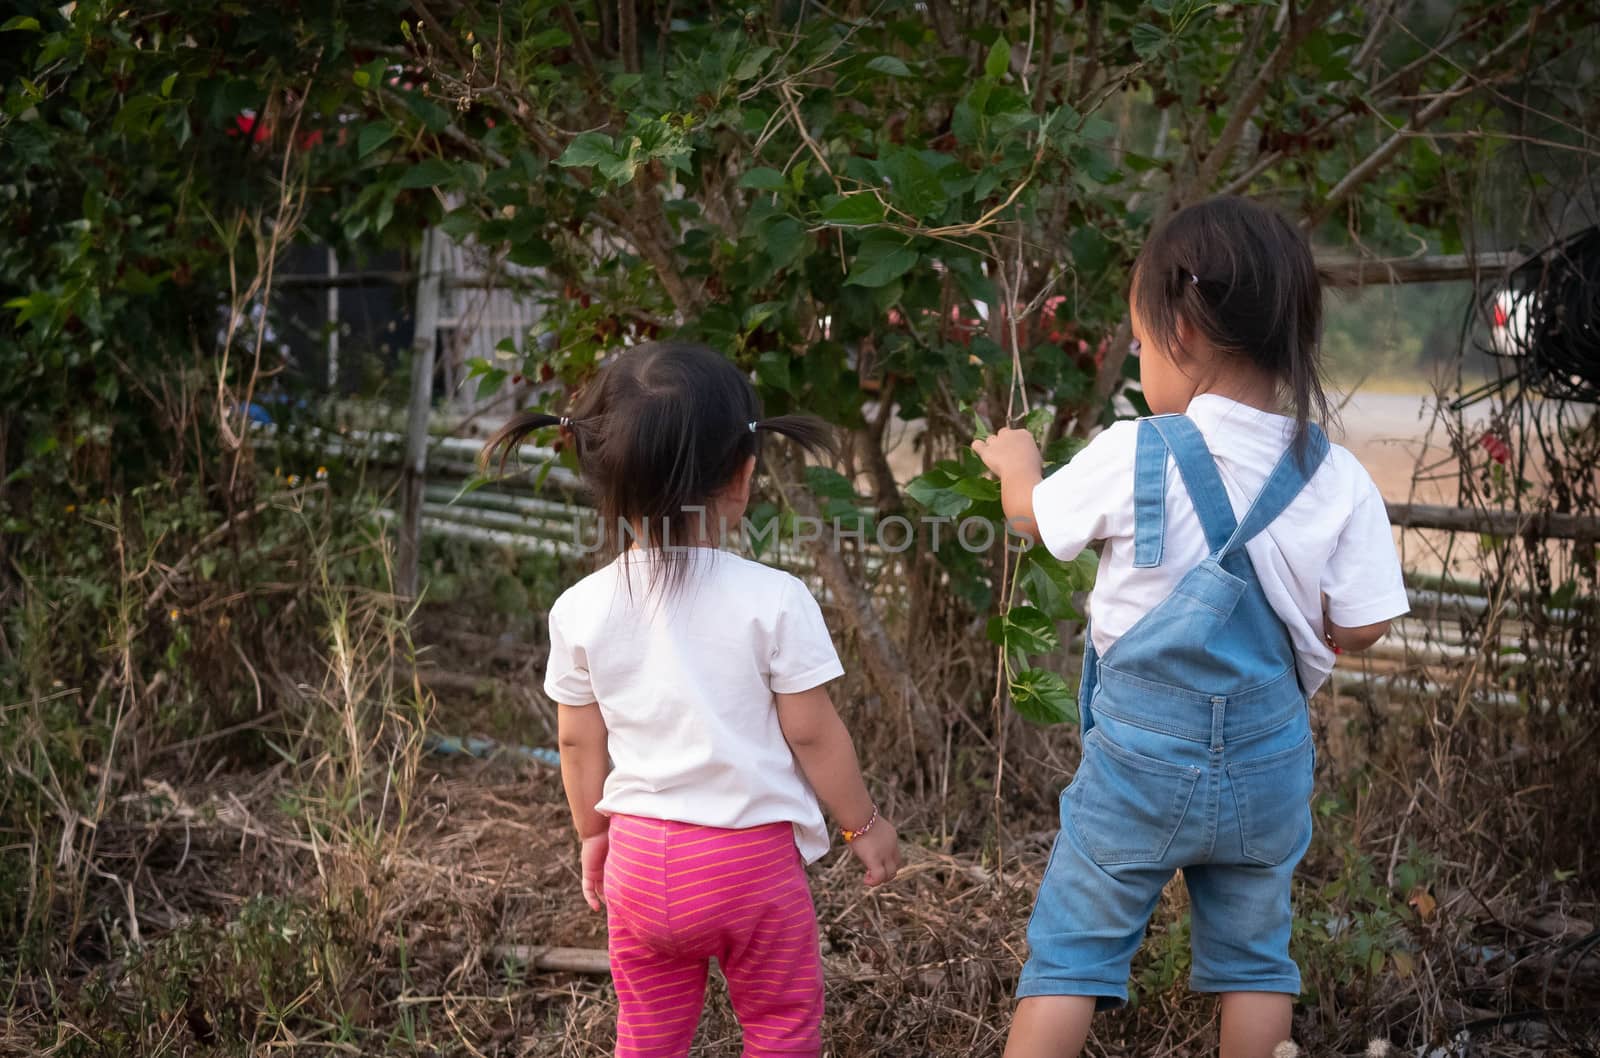 Asian little child girl walking in the garden with cluttered grass. Dangerous in children. by TEERASAK